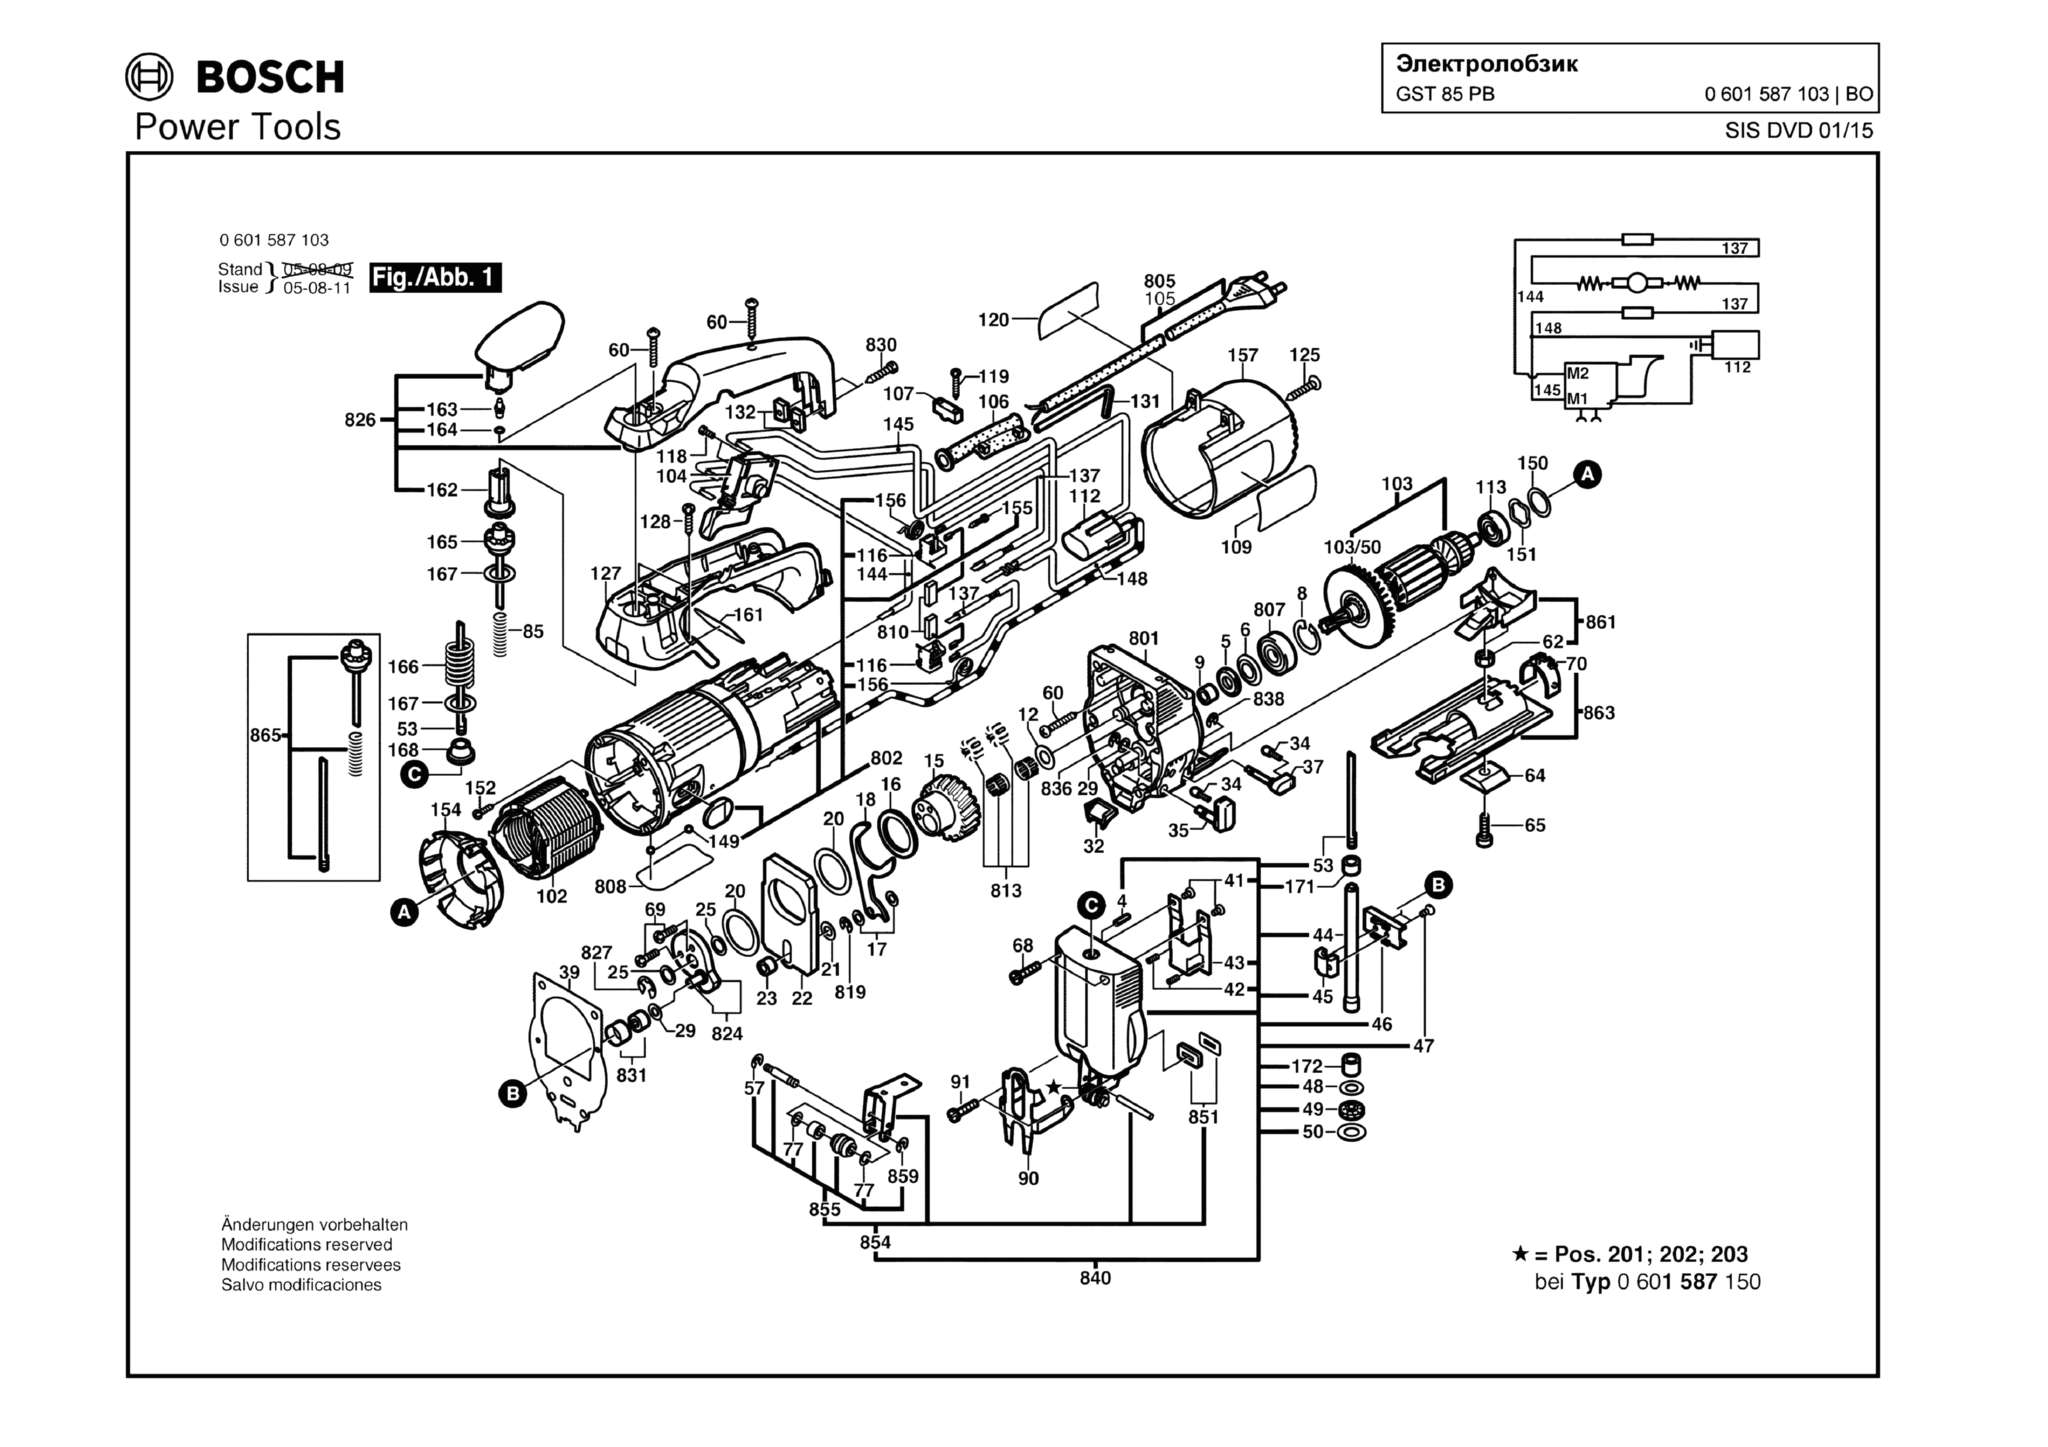 Запчасти, схема и деталировка Bosch GST 85 PB (ТИП 0601587103)